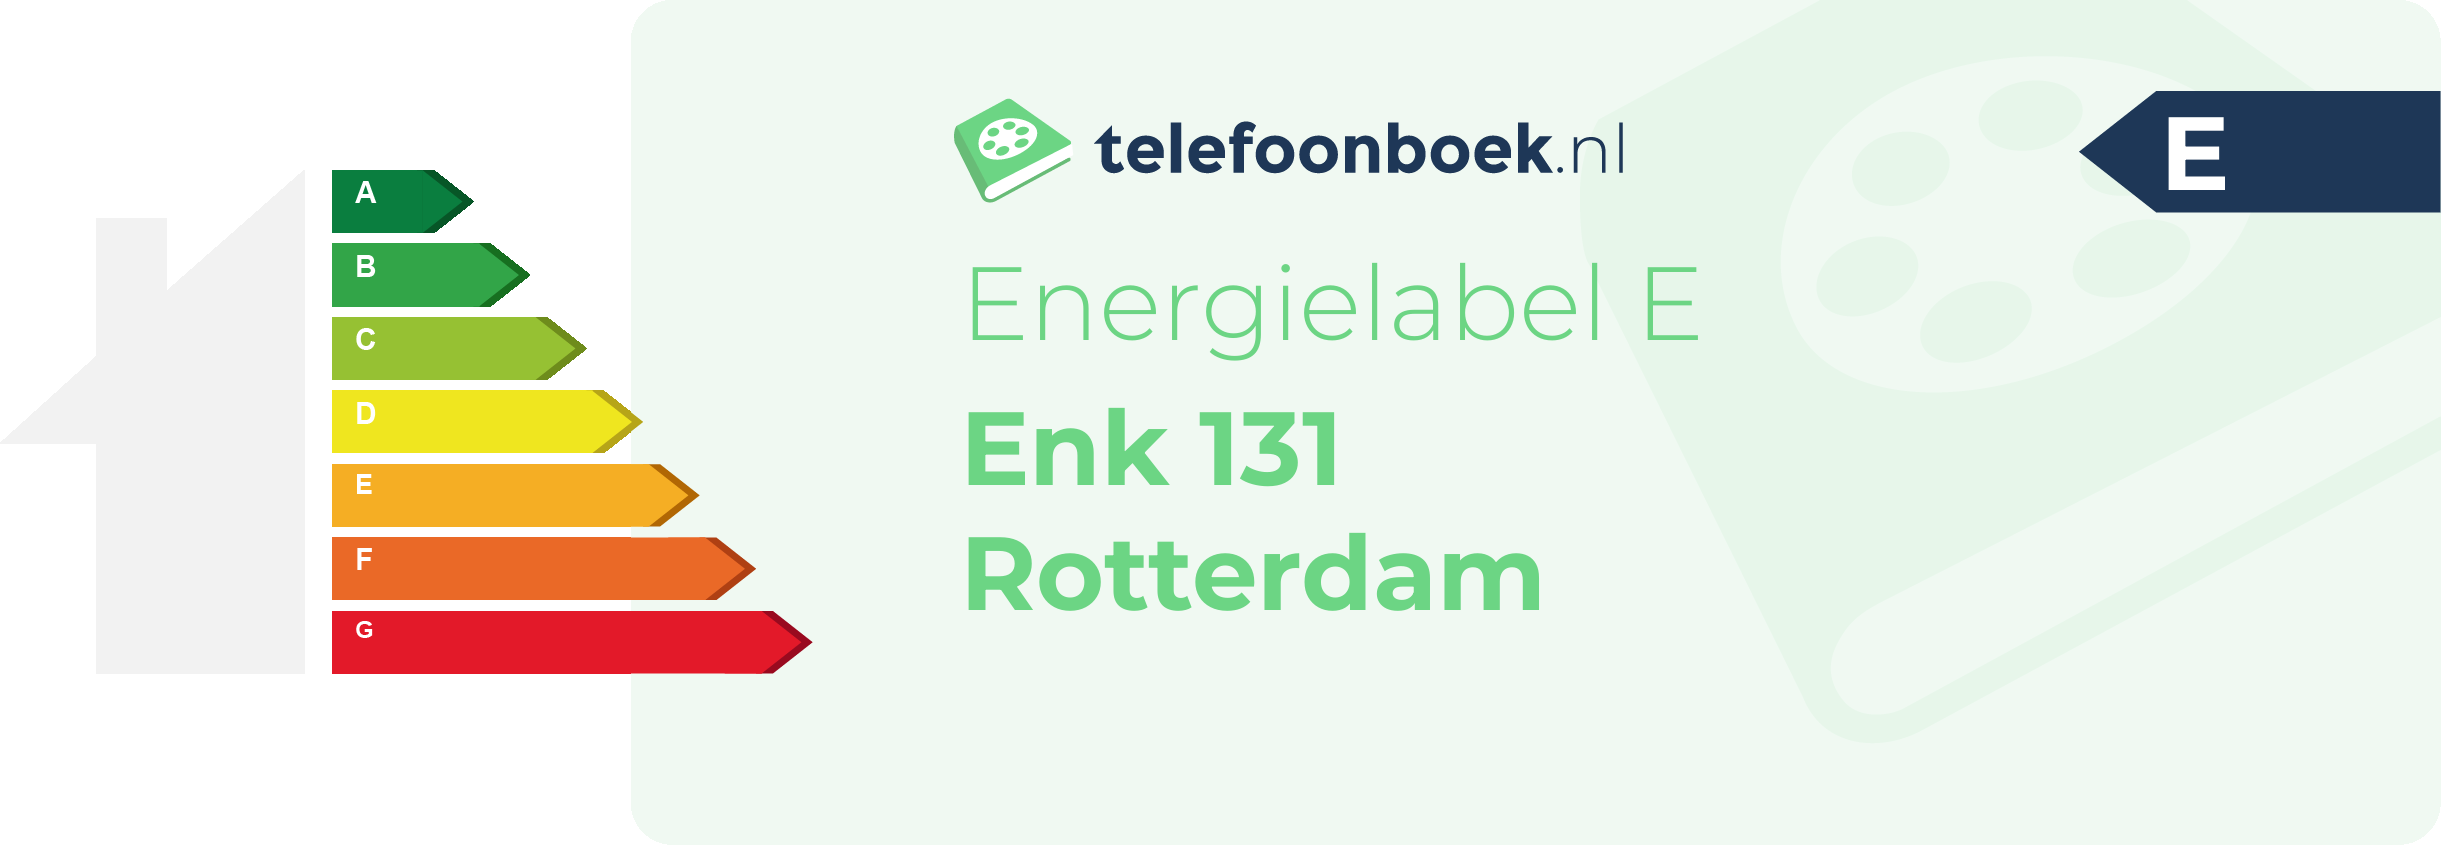 Energielabel Enk 131 Rotterdam